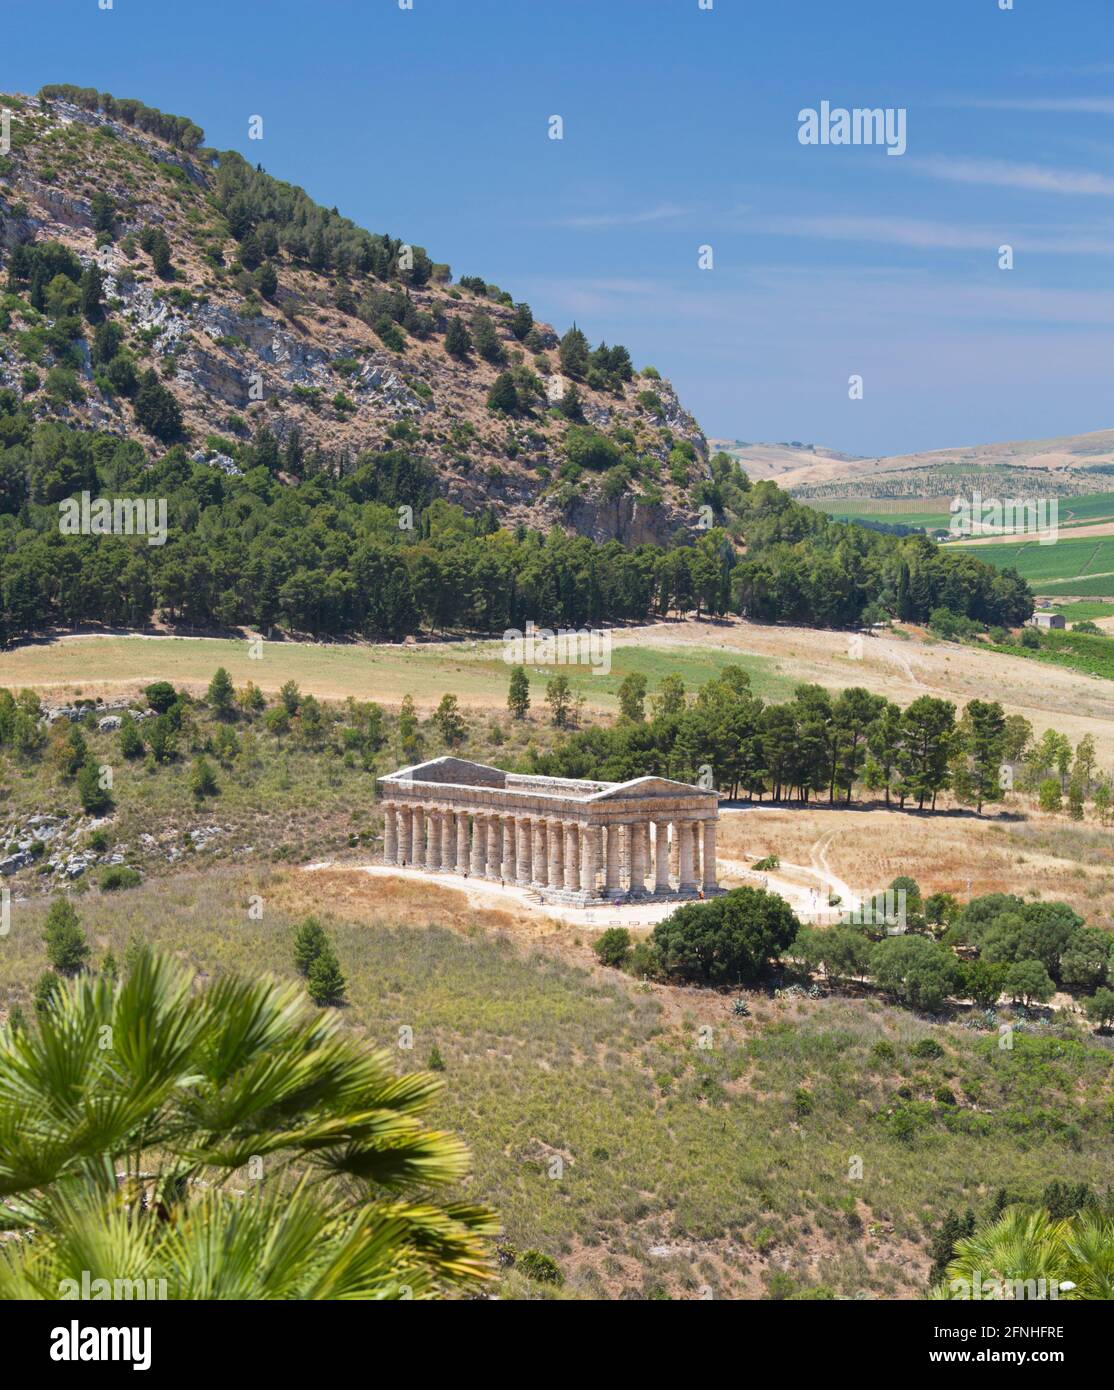 Calatafimi-Segesta, Trapani, Sicily, Italy. 5th century BC Doric temple in rural setting at the foot of Monte Bàrbaro, Segesta archaeological site. Stock Photo